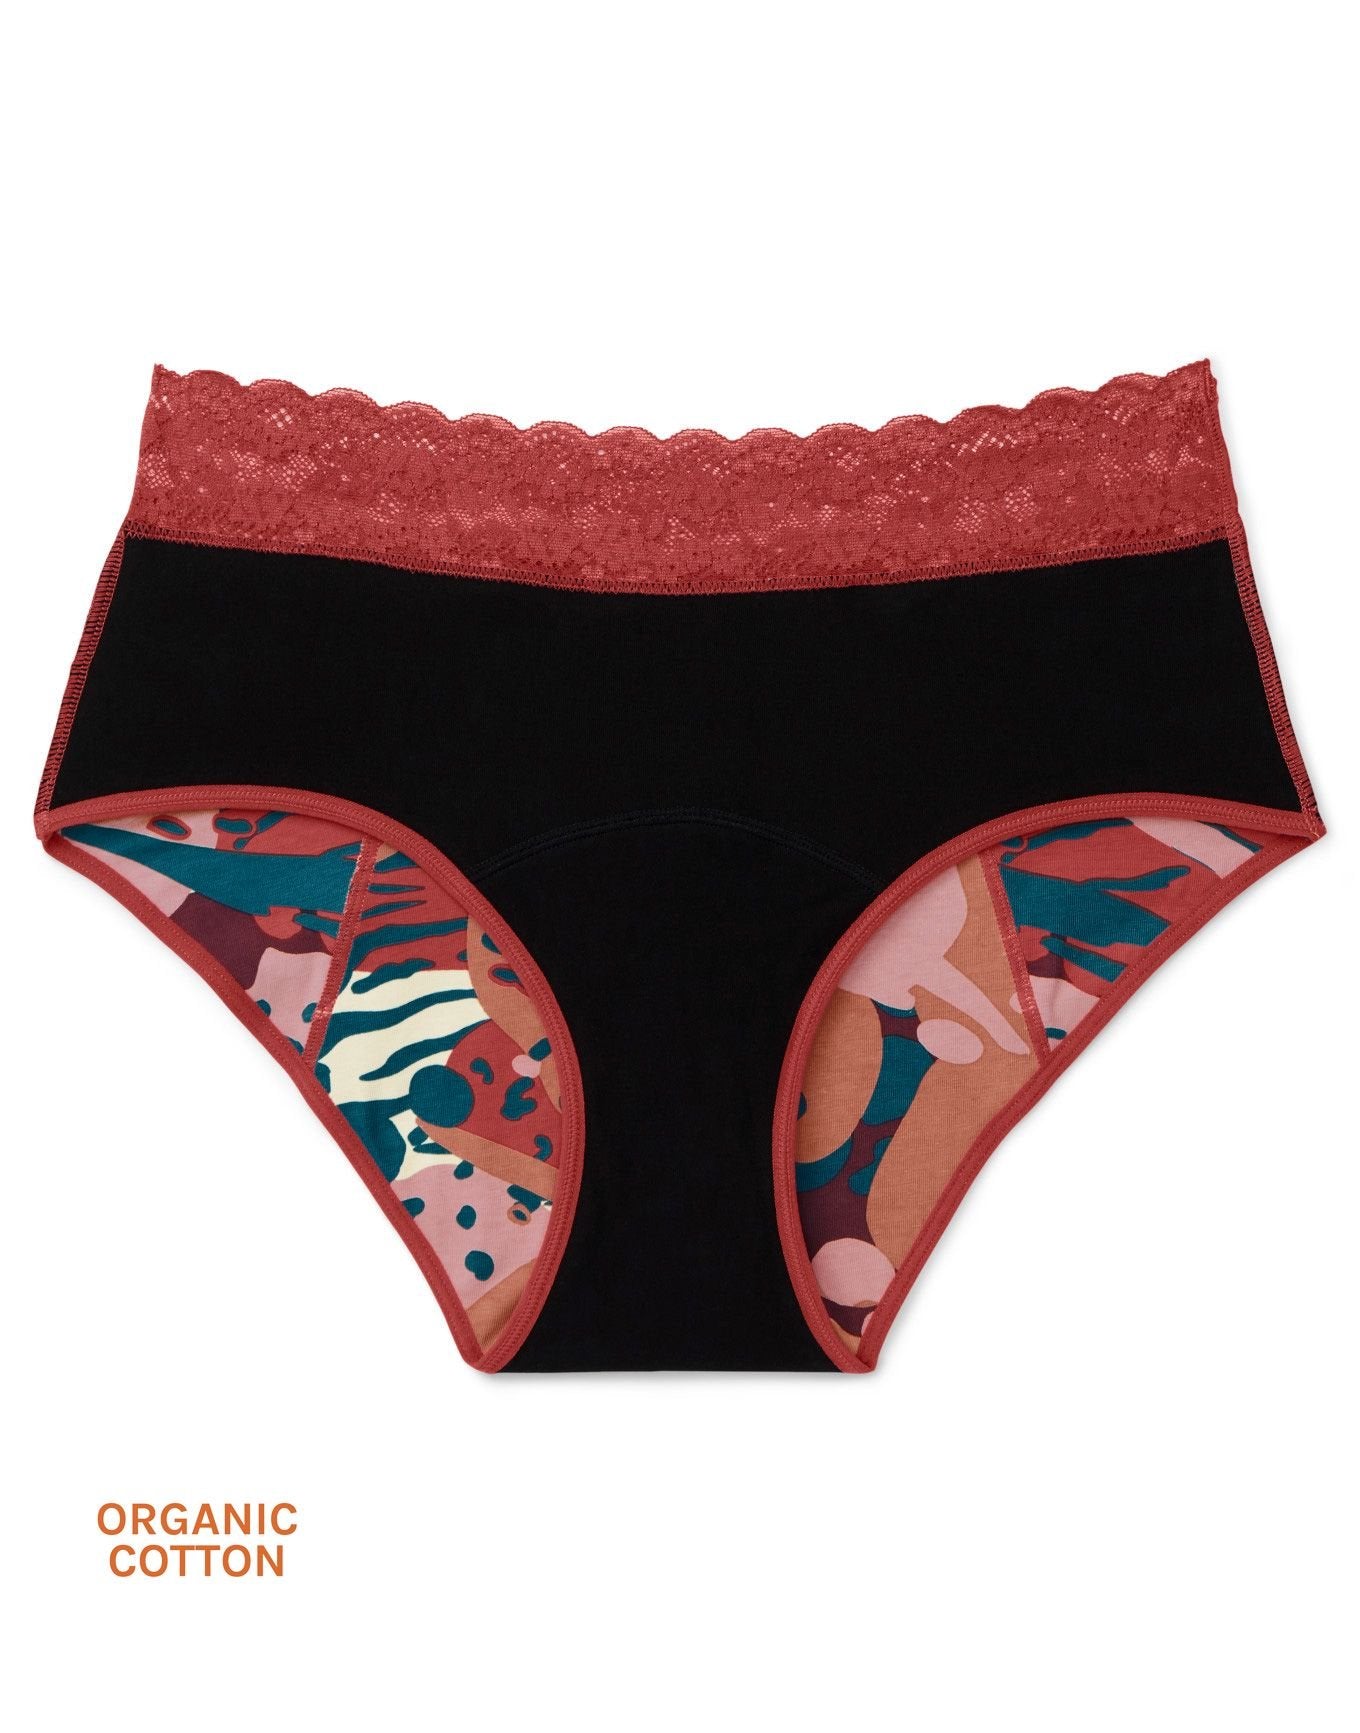 Joyja Ella period-proof panty in color Wild Heart C01 and shape midi brief